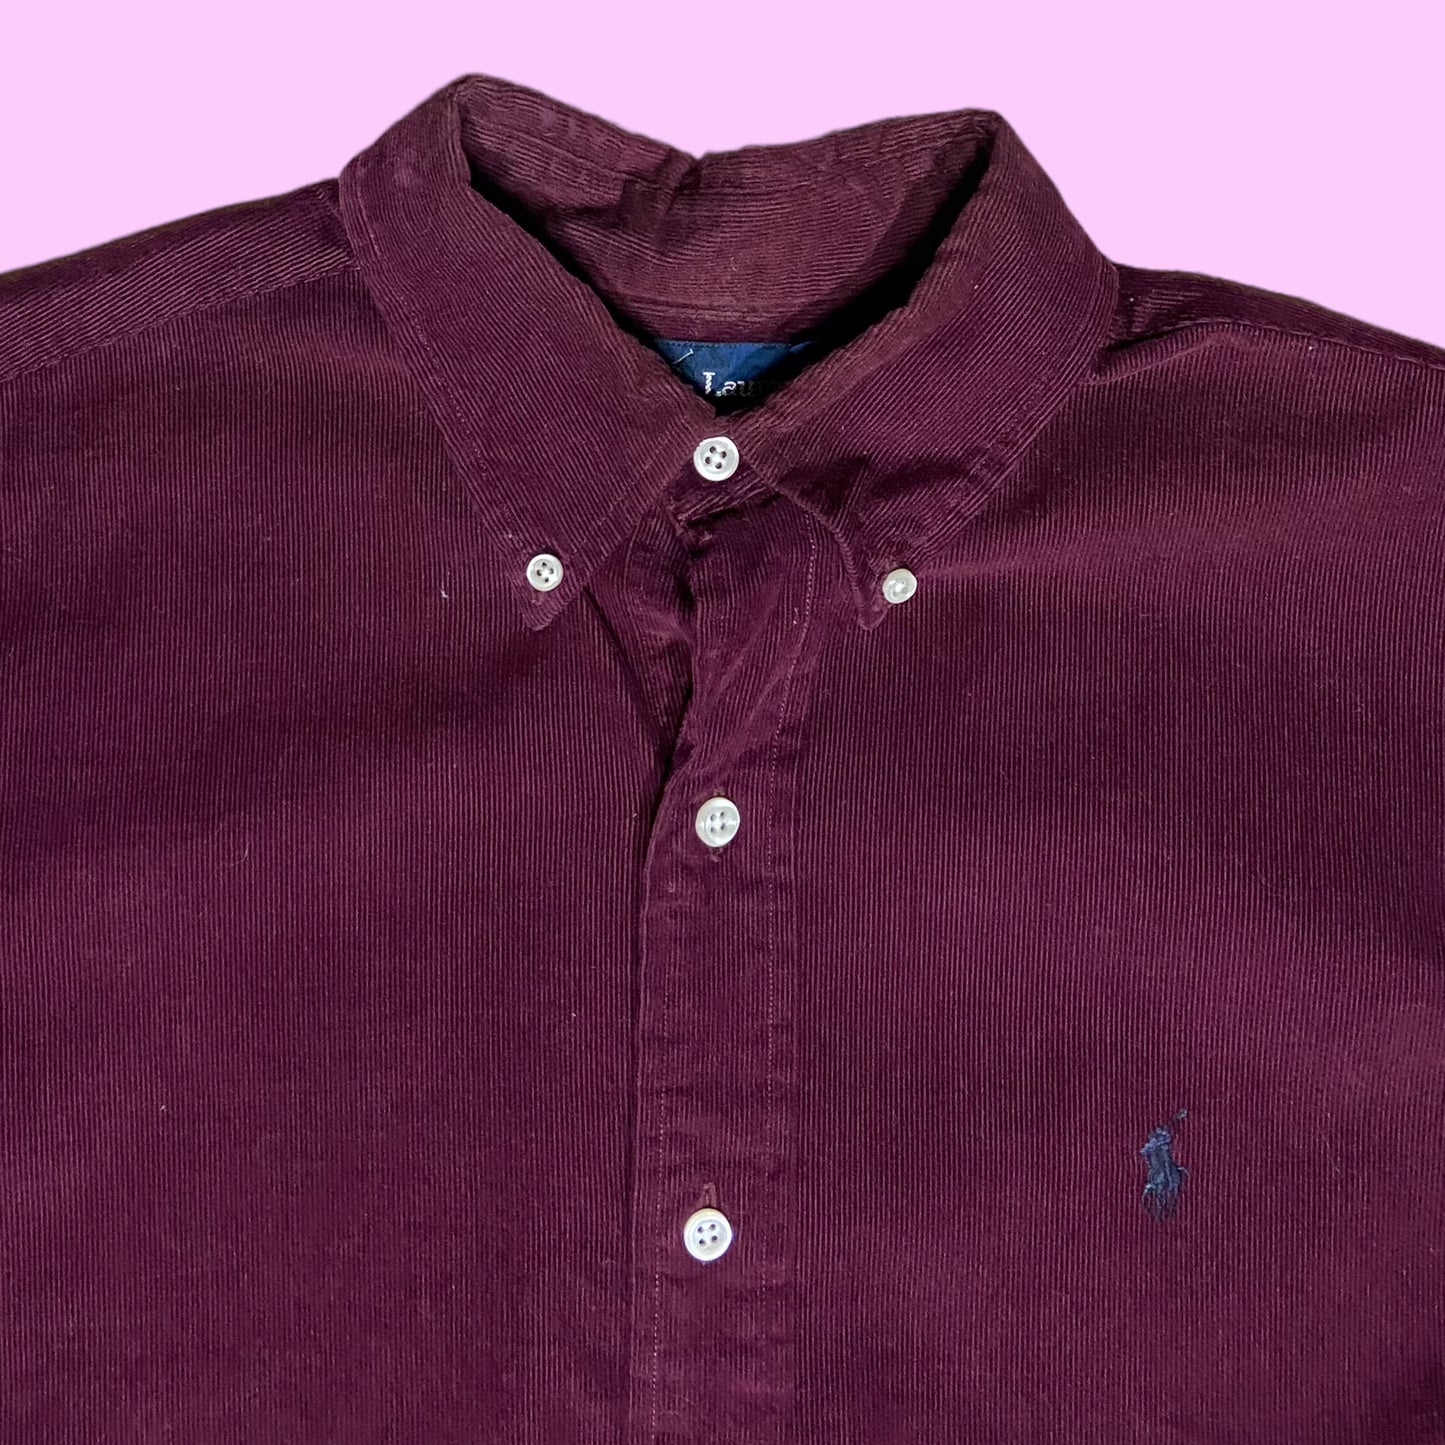 Vintage Ralph Lauren corduroy shirt - M